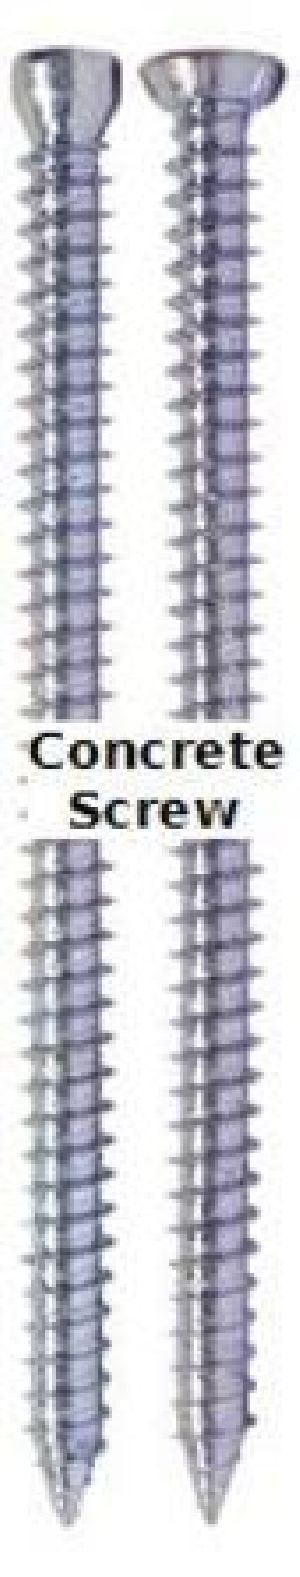 Concrete Screw